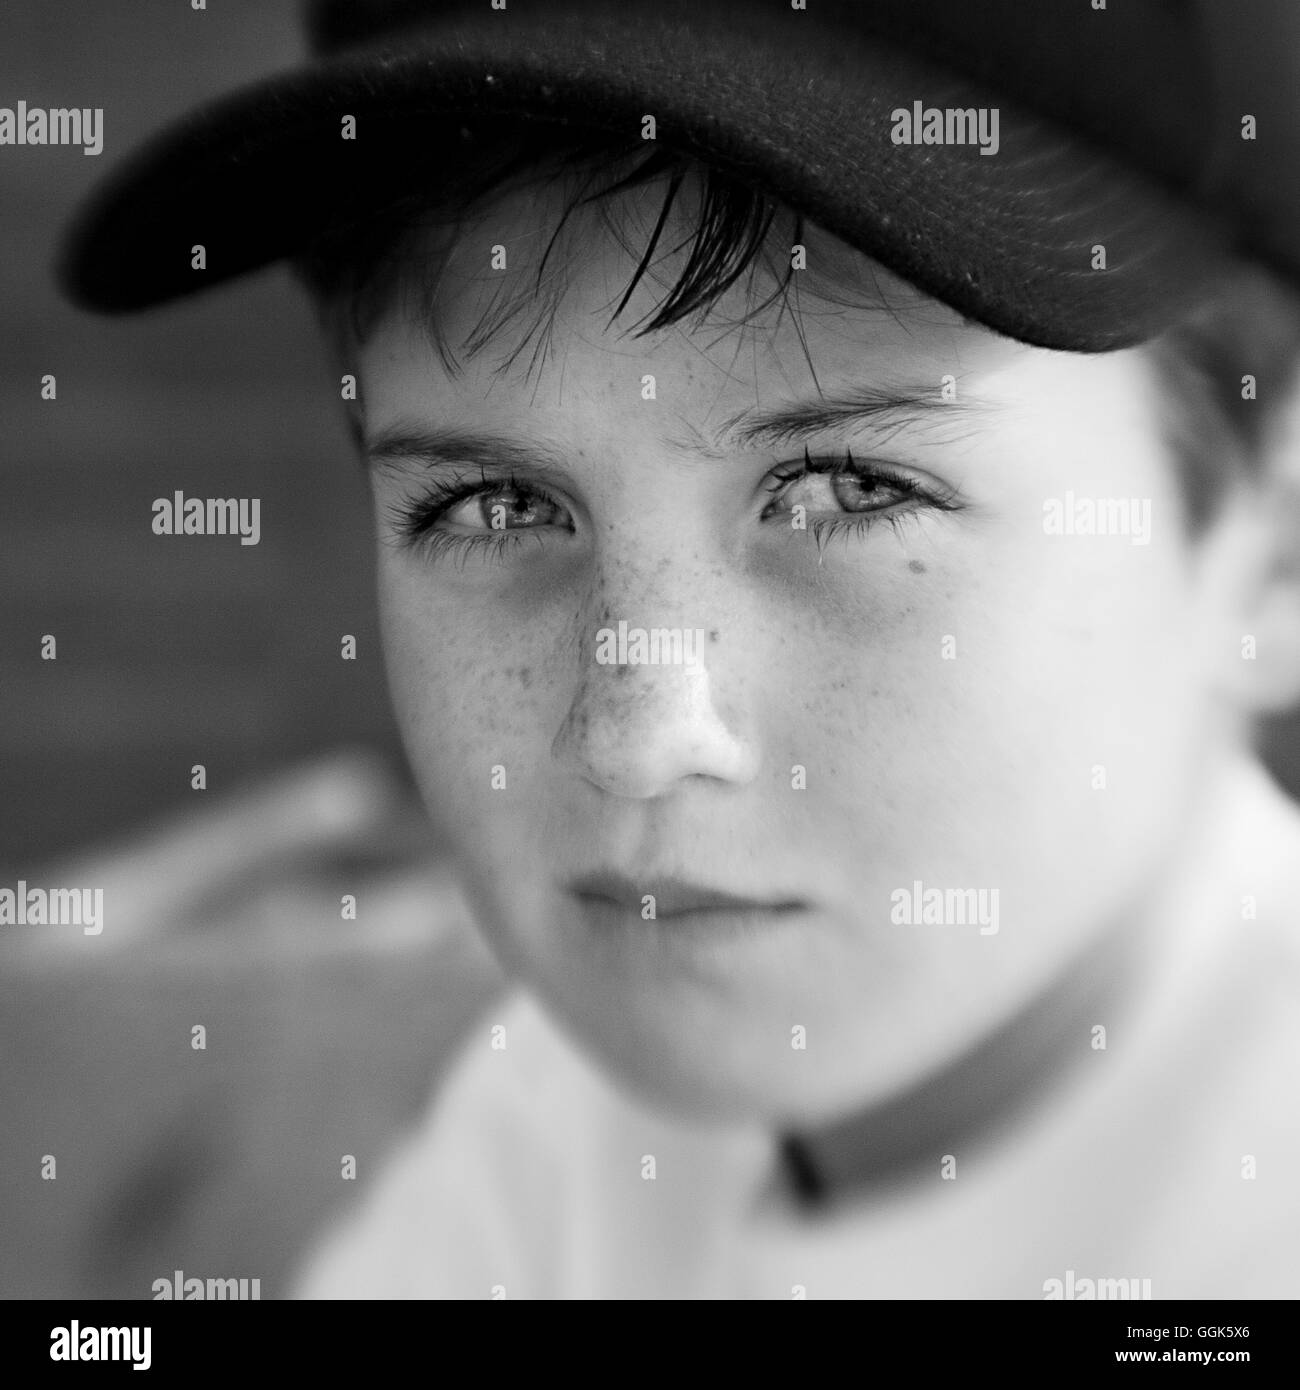 Boy with a cap looking serious (black and white photo using Lensbaby technique), Borden, Western Australia, Australia Stock Photo